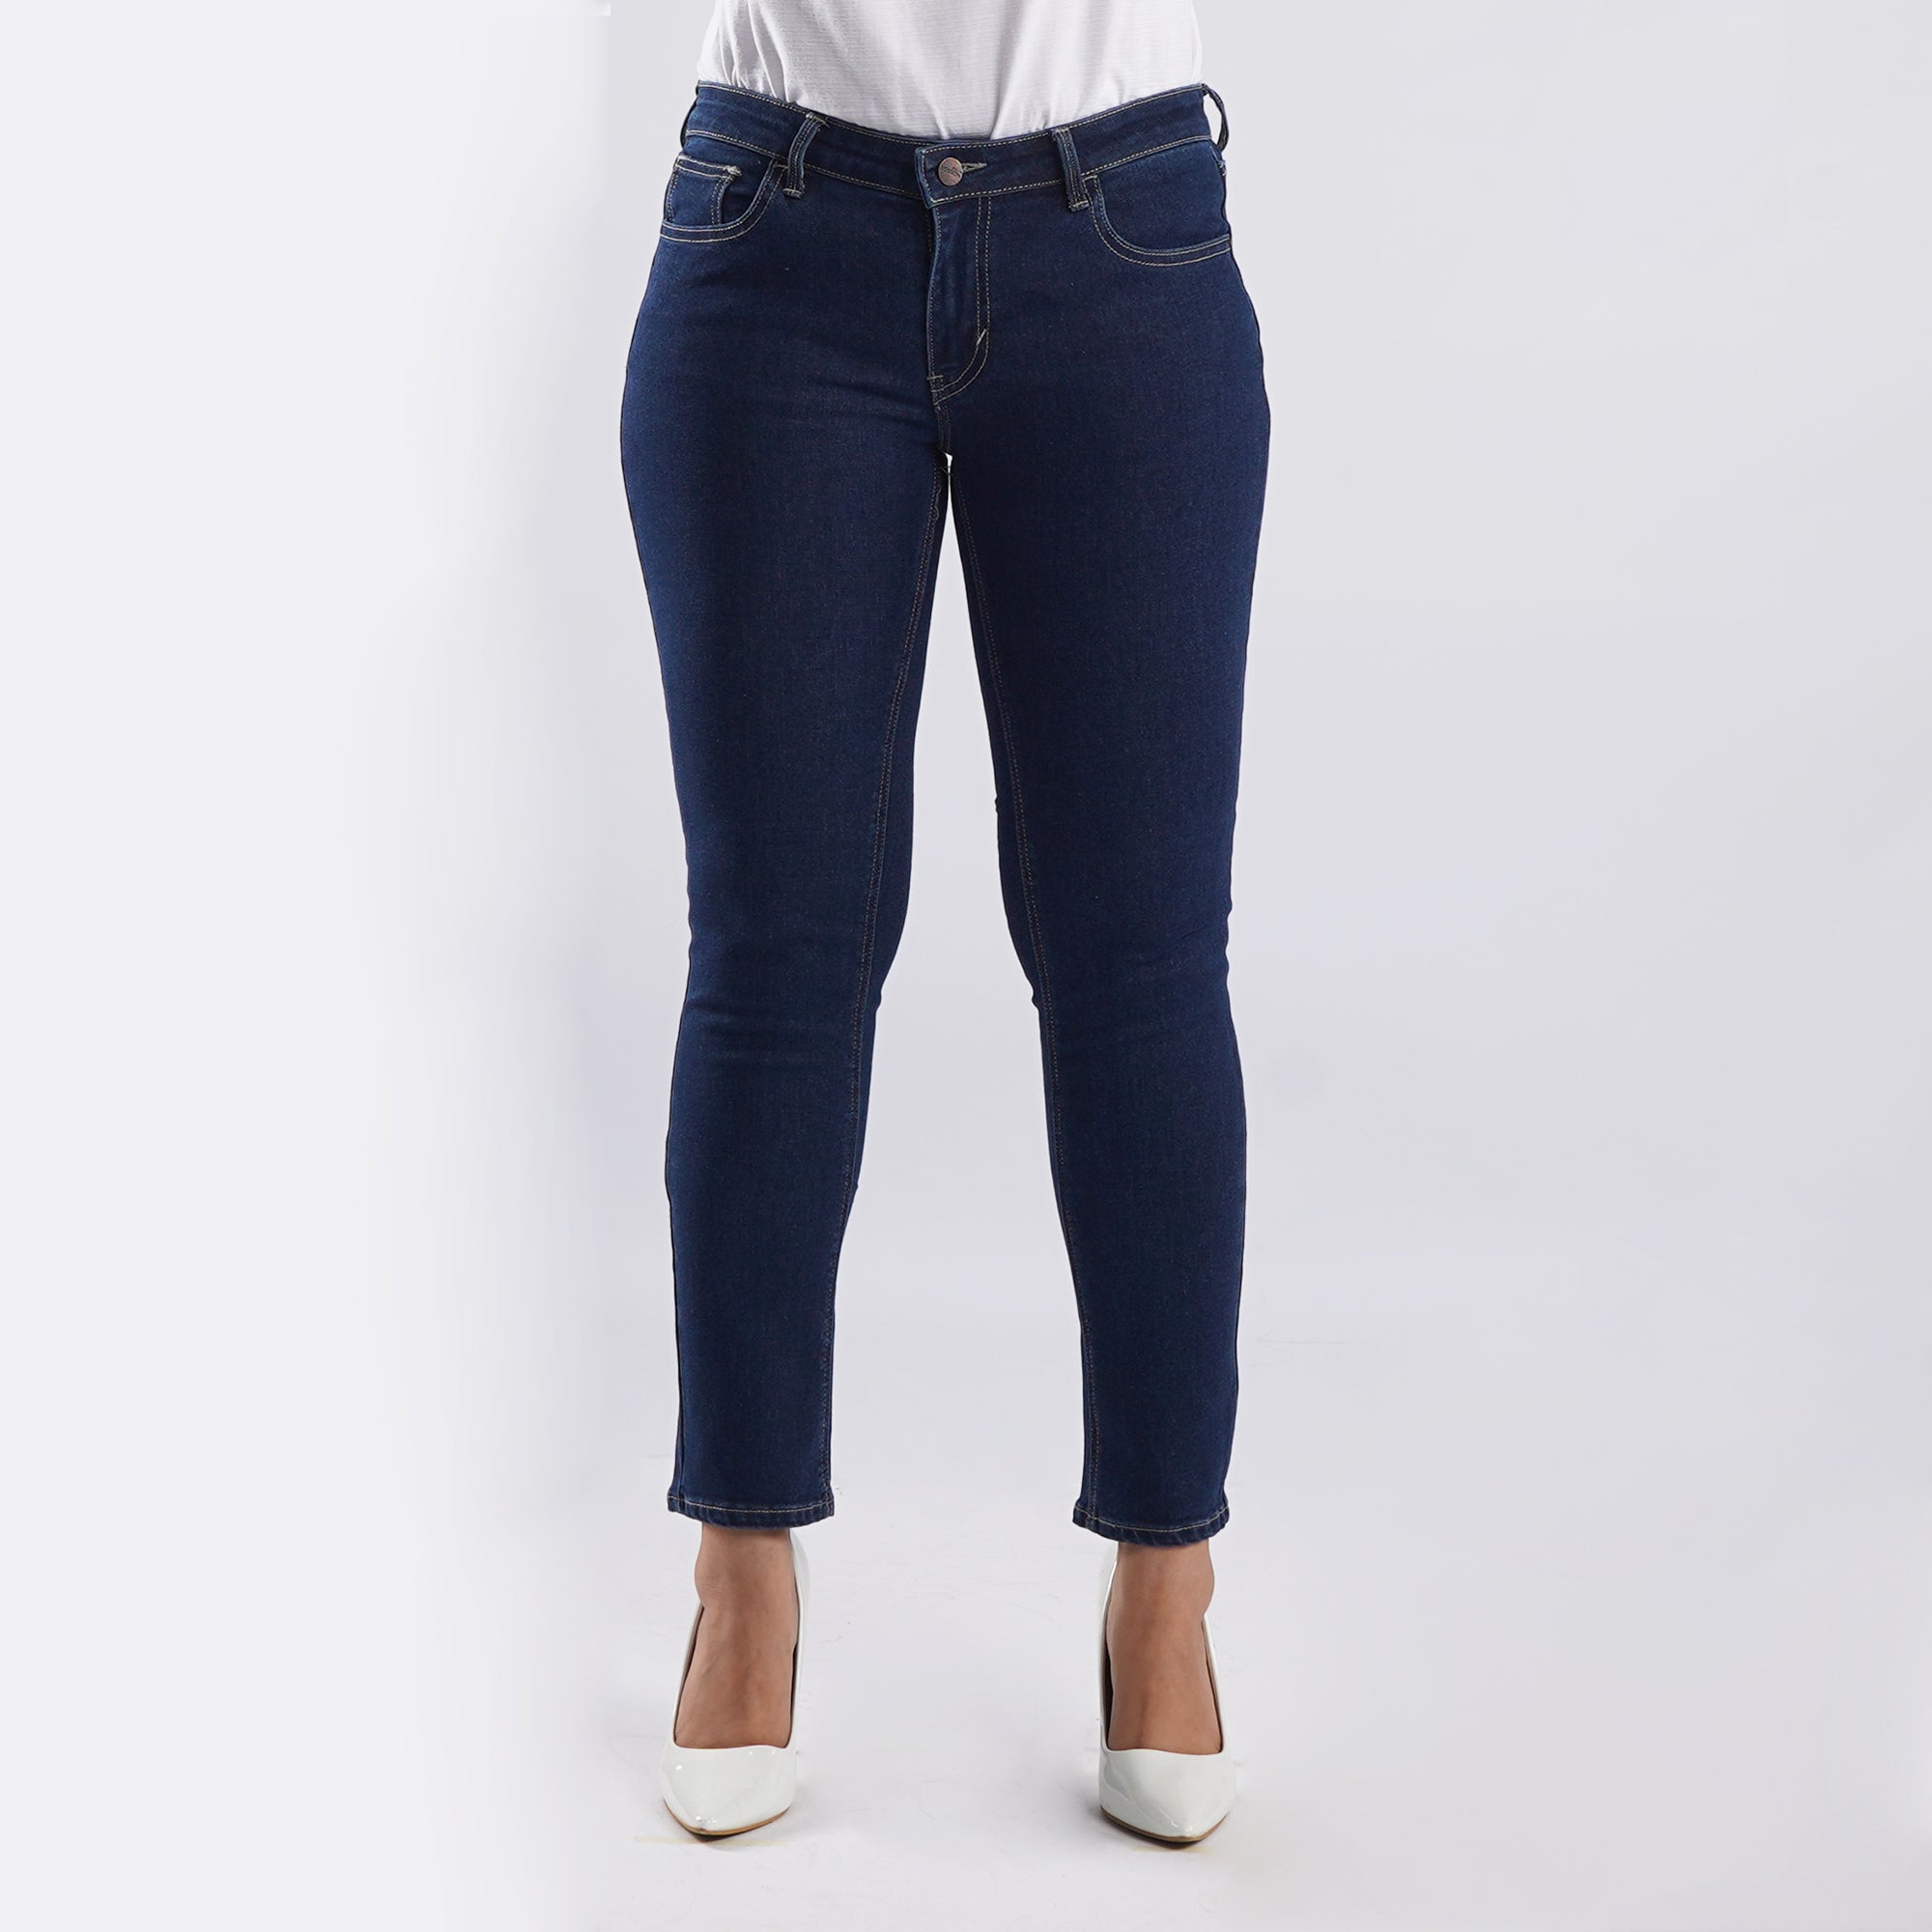 Bobson Japanese Ladies Basic Denim Pants for Women Trendy Fashion High Quality Apparel Comfortable Casual Jeans for Women Slim Fit 149932-U (Dark Shade)